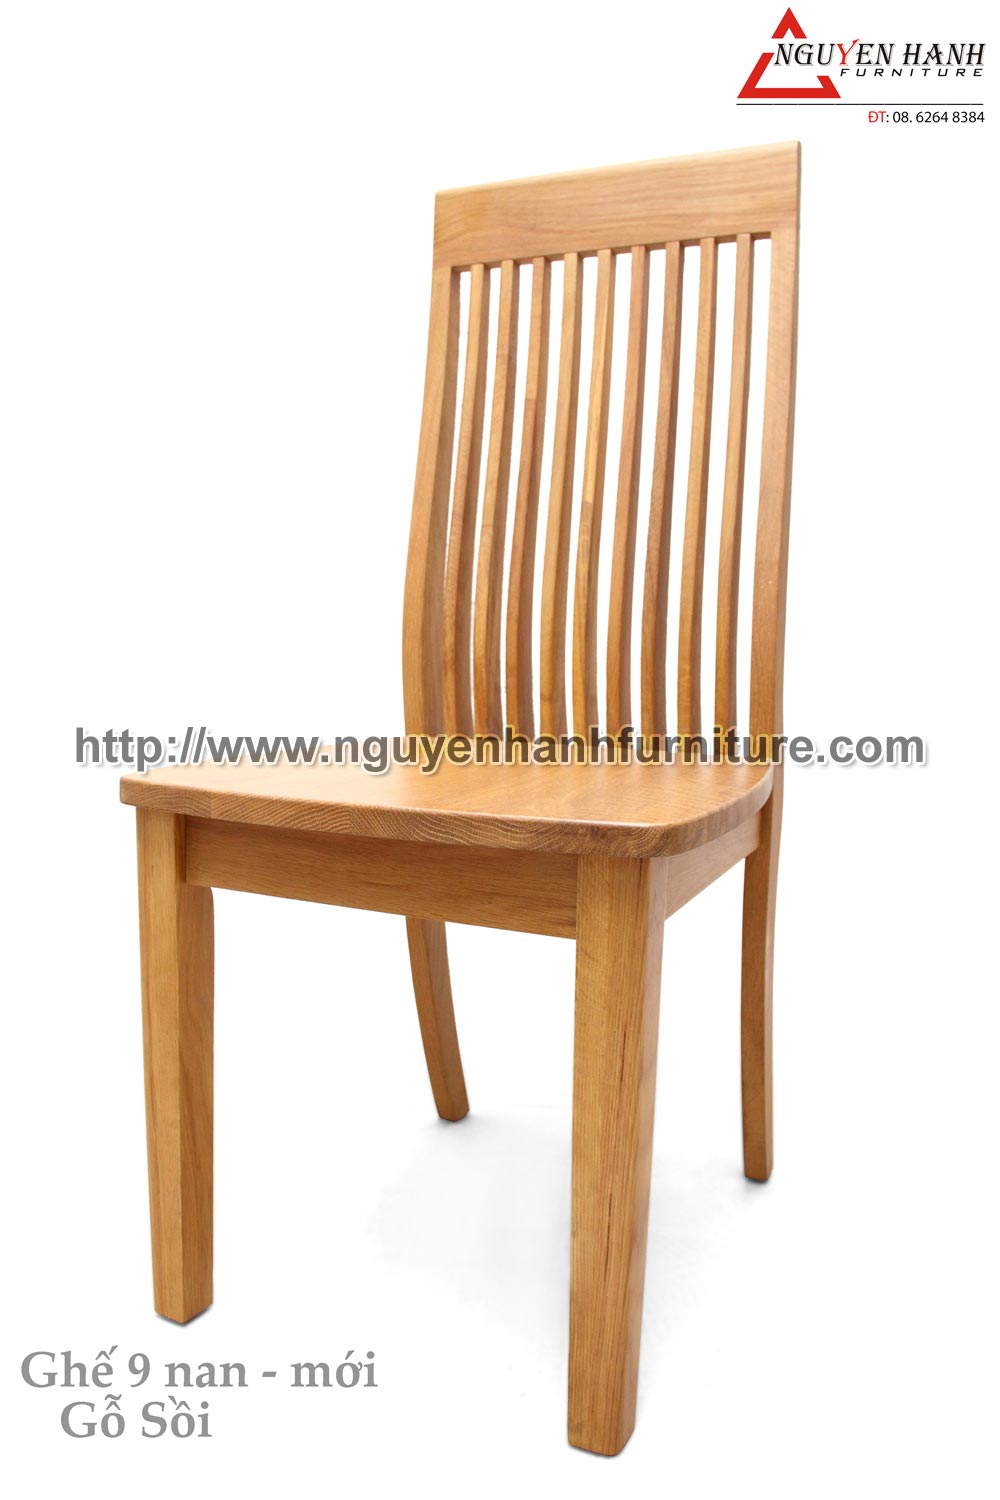 Name product: 9 blade chair of American Oak tree wood- Dimensions:  - Description: Natural oak wood